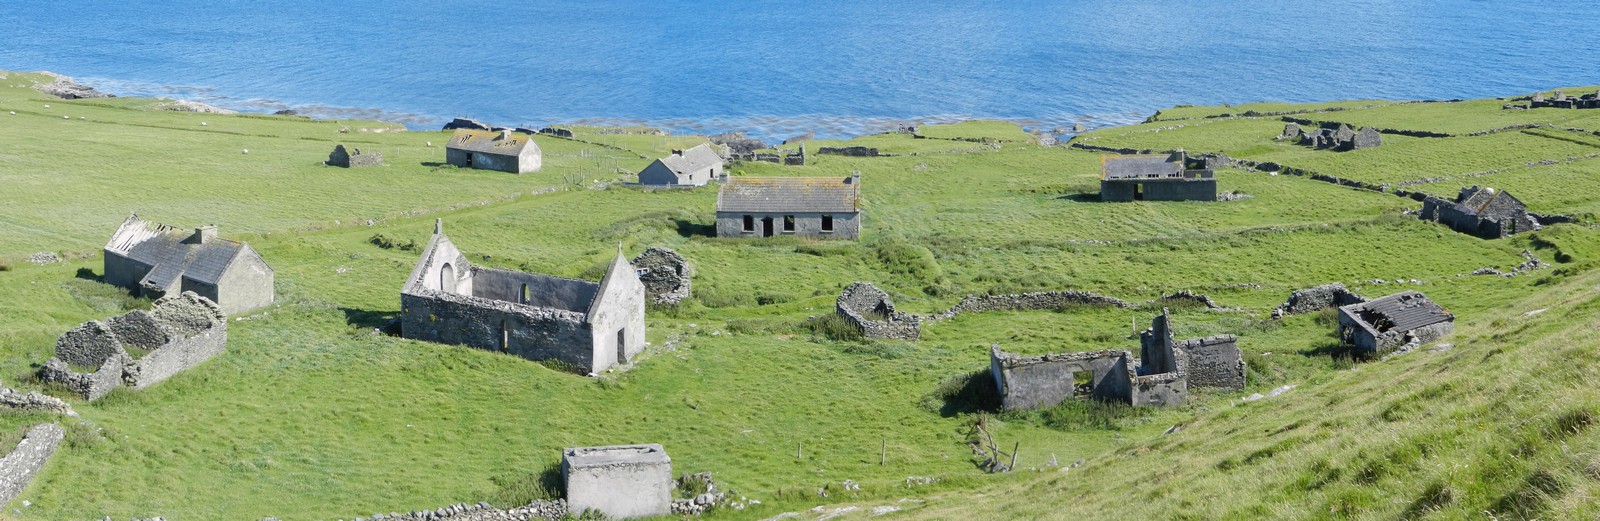 Inishark - abandoned houses and church